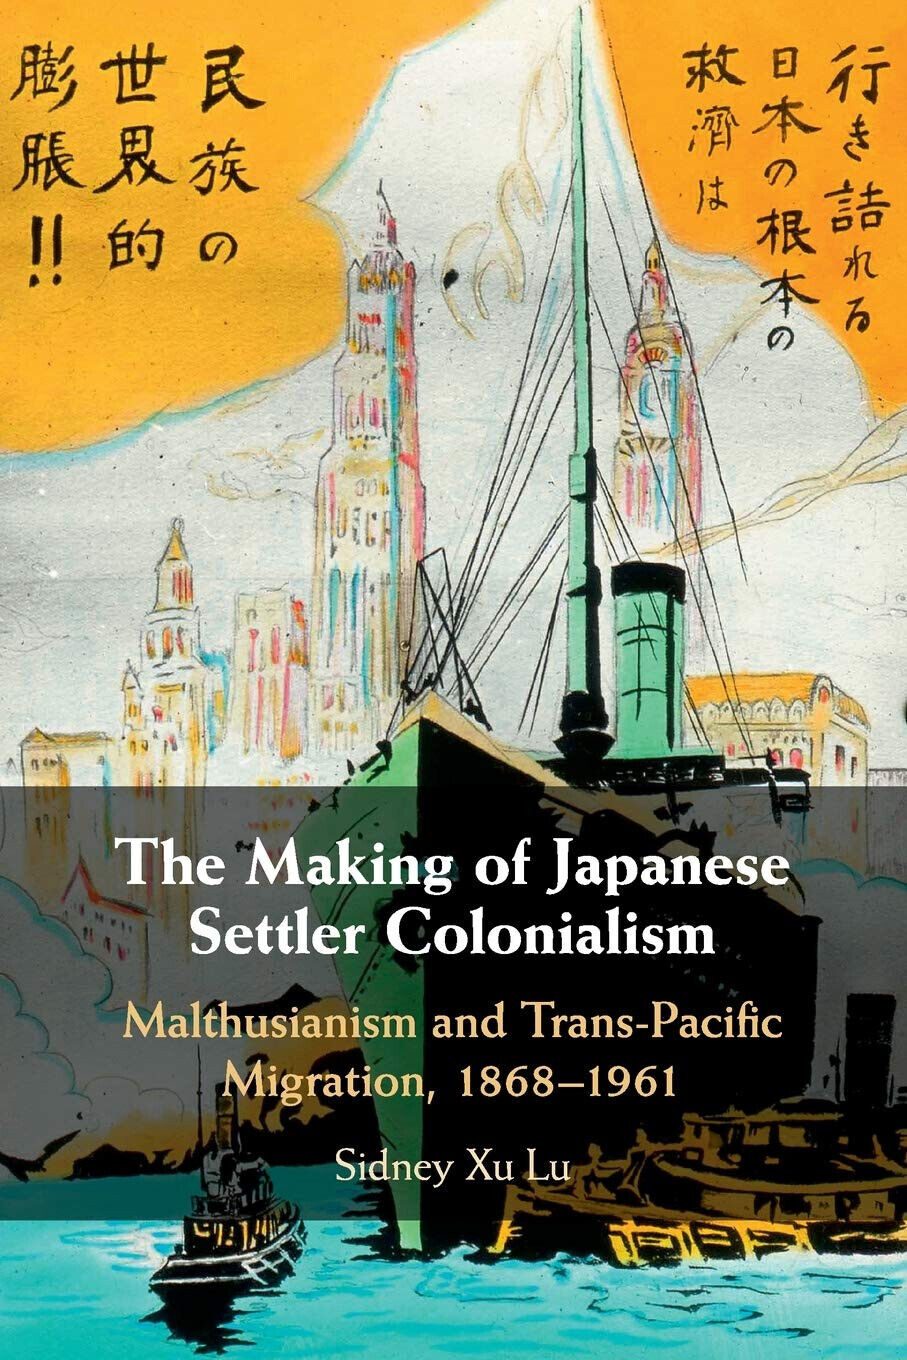 The Making Of Japanese Settler Colonialism - Sidney Xu Lu - Cambridge, 2020